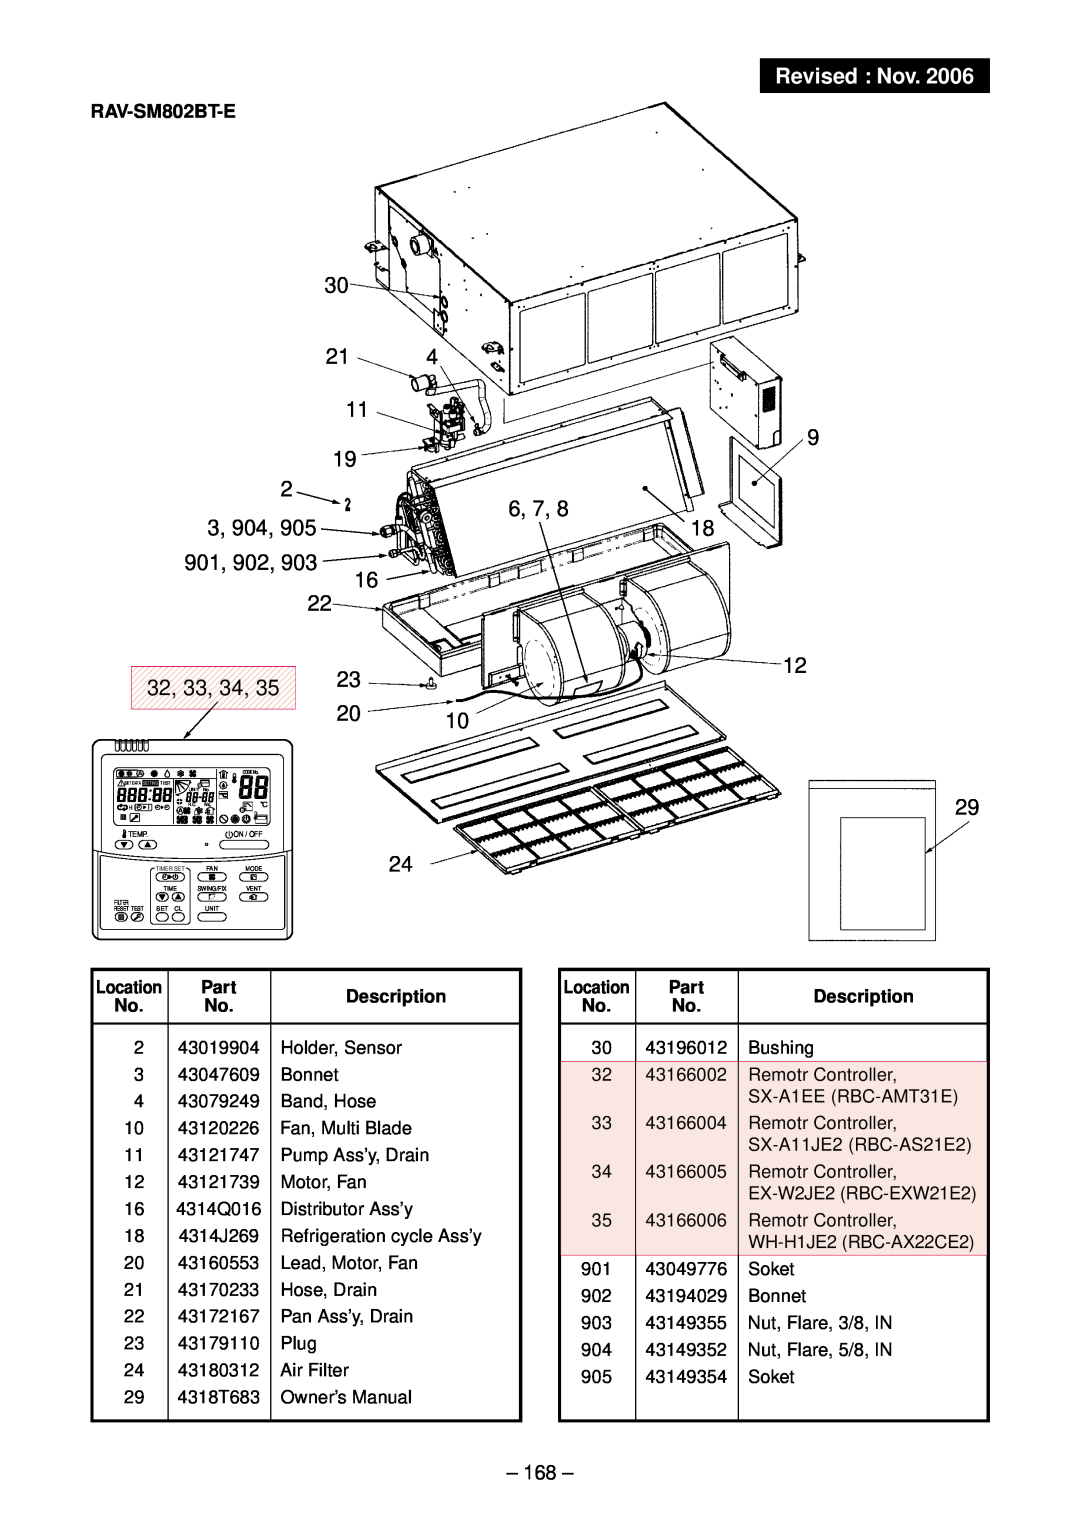 Toshiba RAV-SM1102UT-E, RAV-SM1402UT-E, RAV-SM802UT-E, RAV-SM562UT-E service manual Revised : Nov, 168, Part, Description 